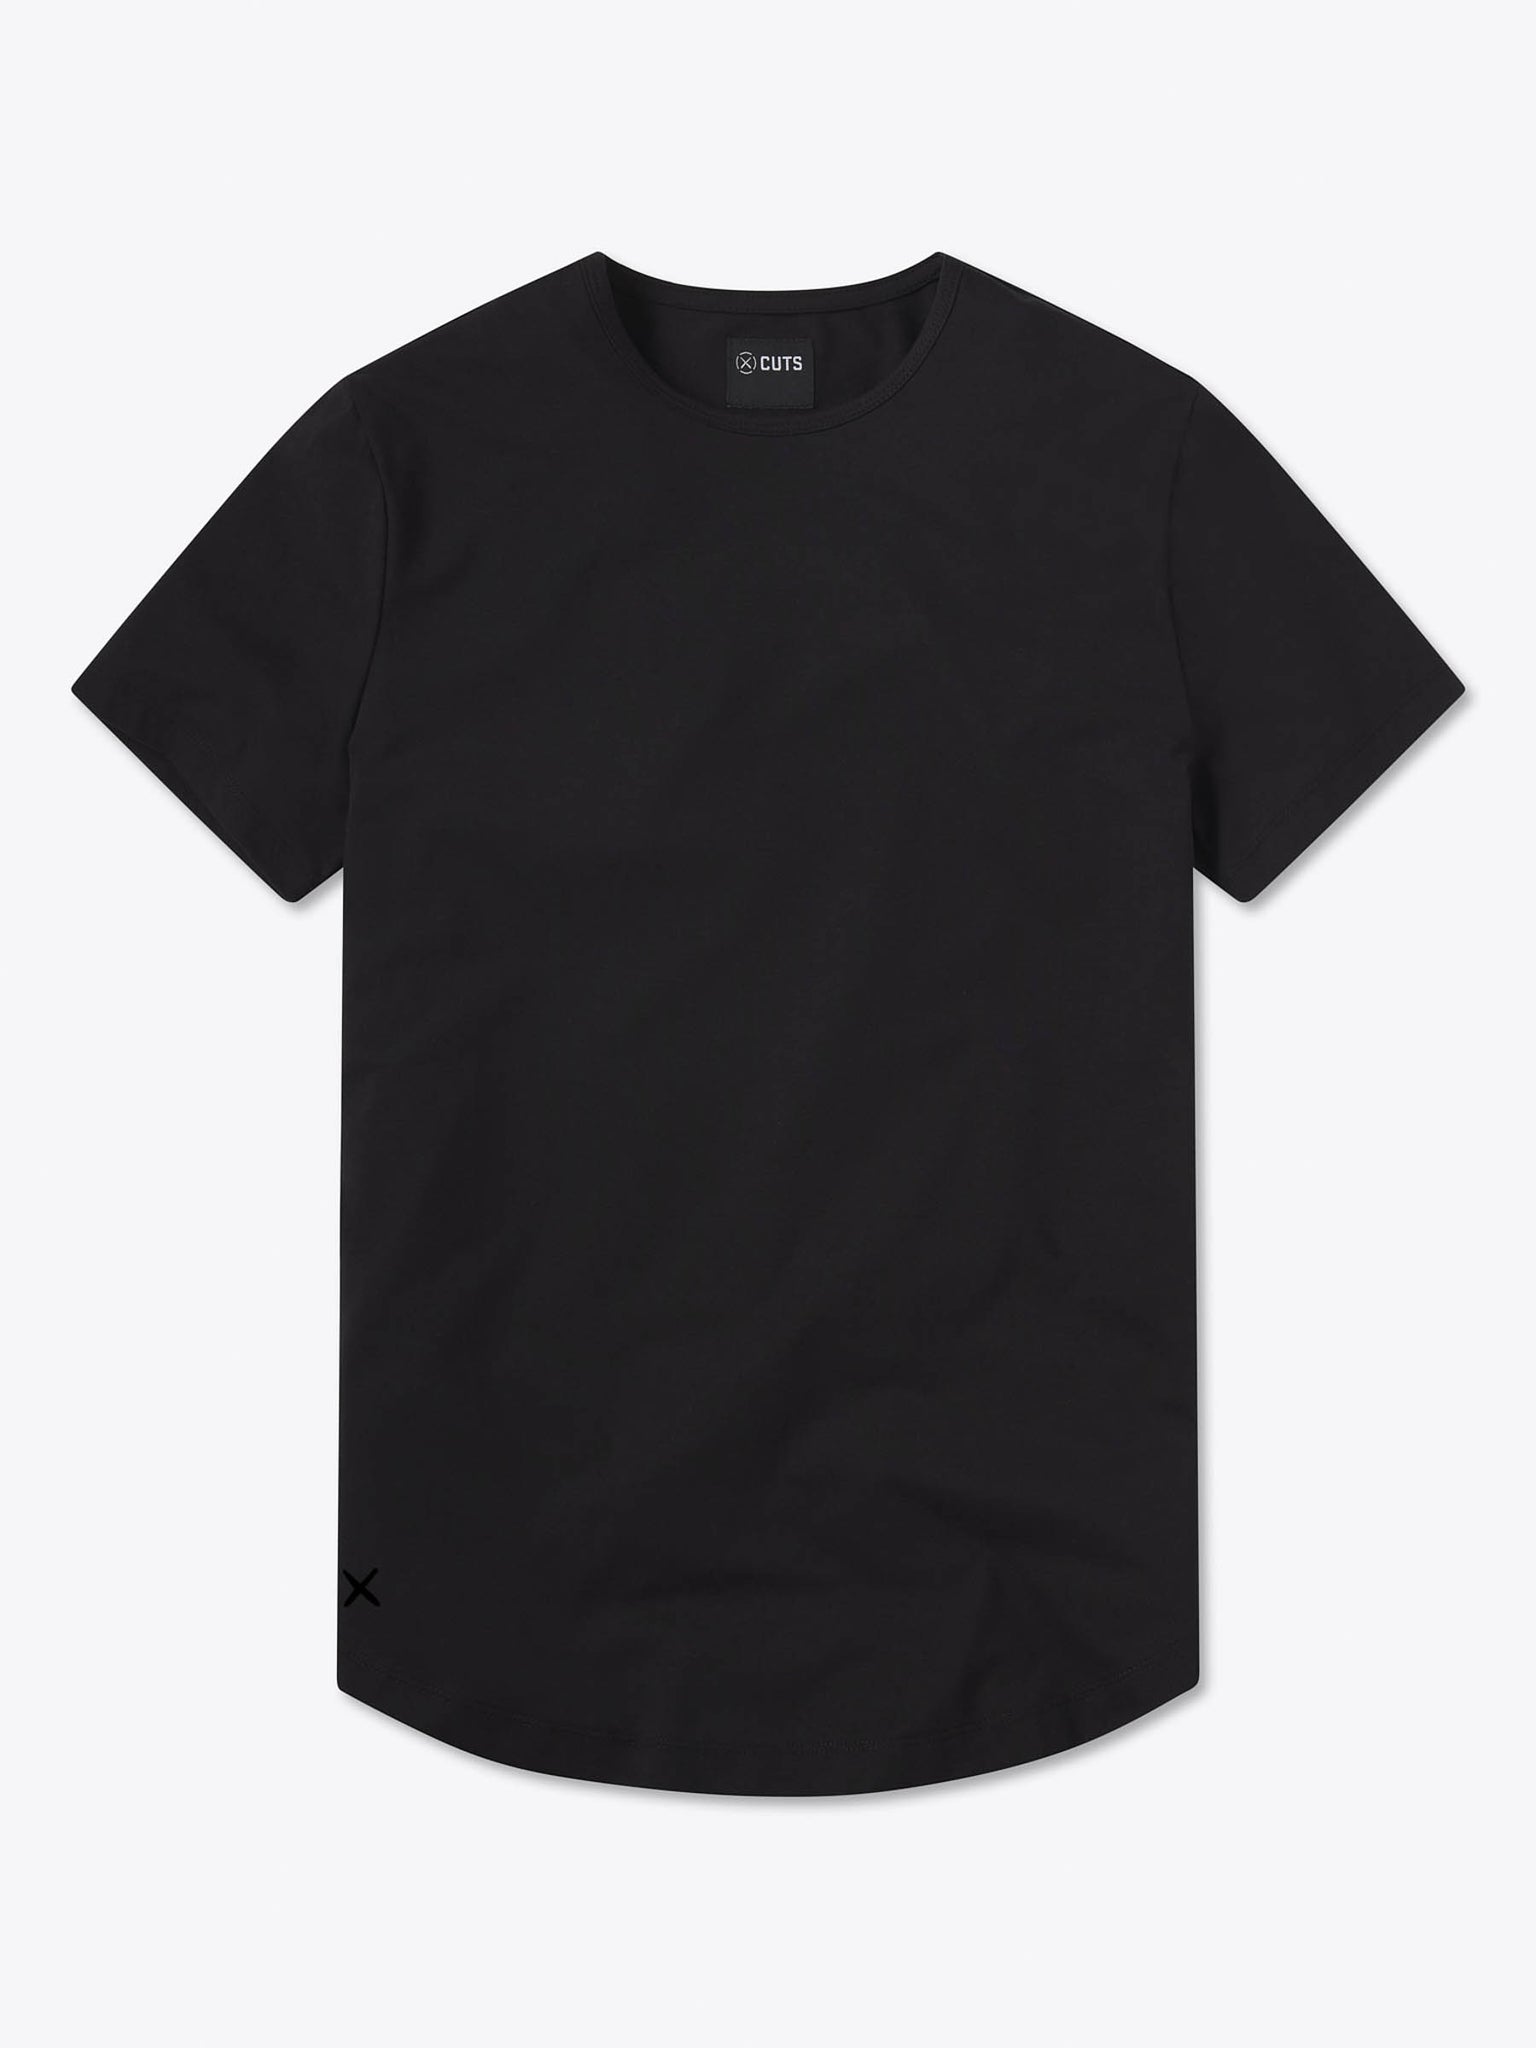 True Classic Black Tall Round Hem Crew Neck T-Shirt | Cotton Blend | Athletic Cut | XL / XL